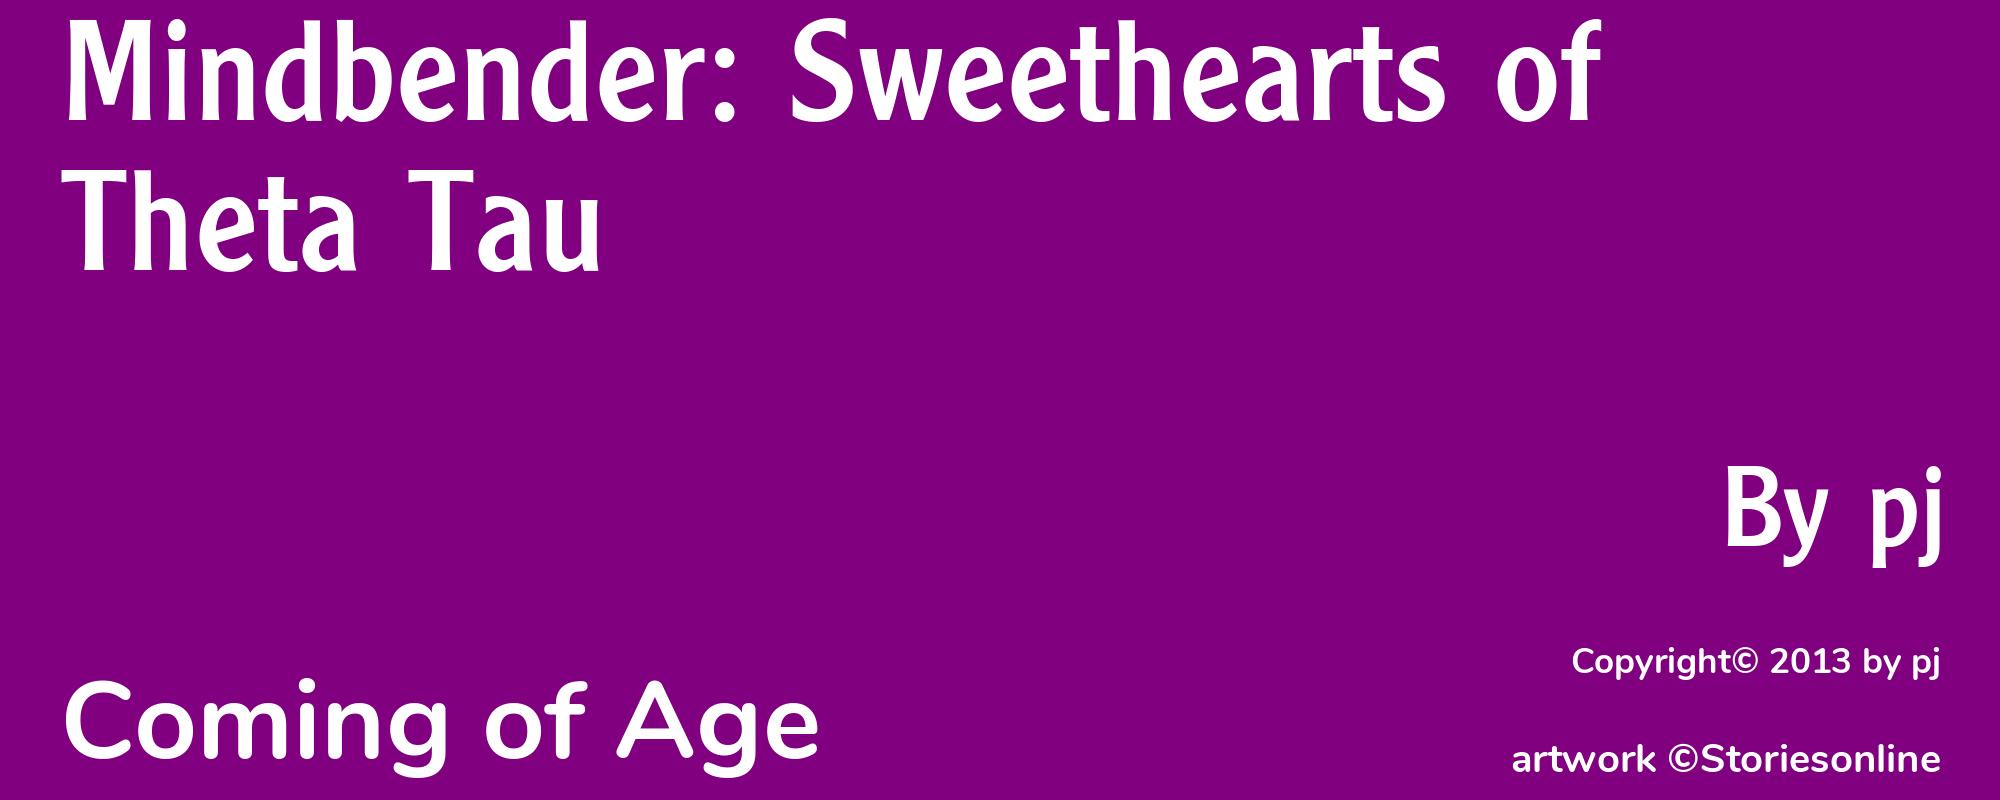 Mindbender: Sweethearts of Theta Tau - Cover